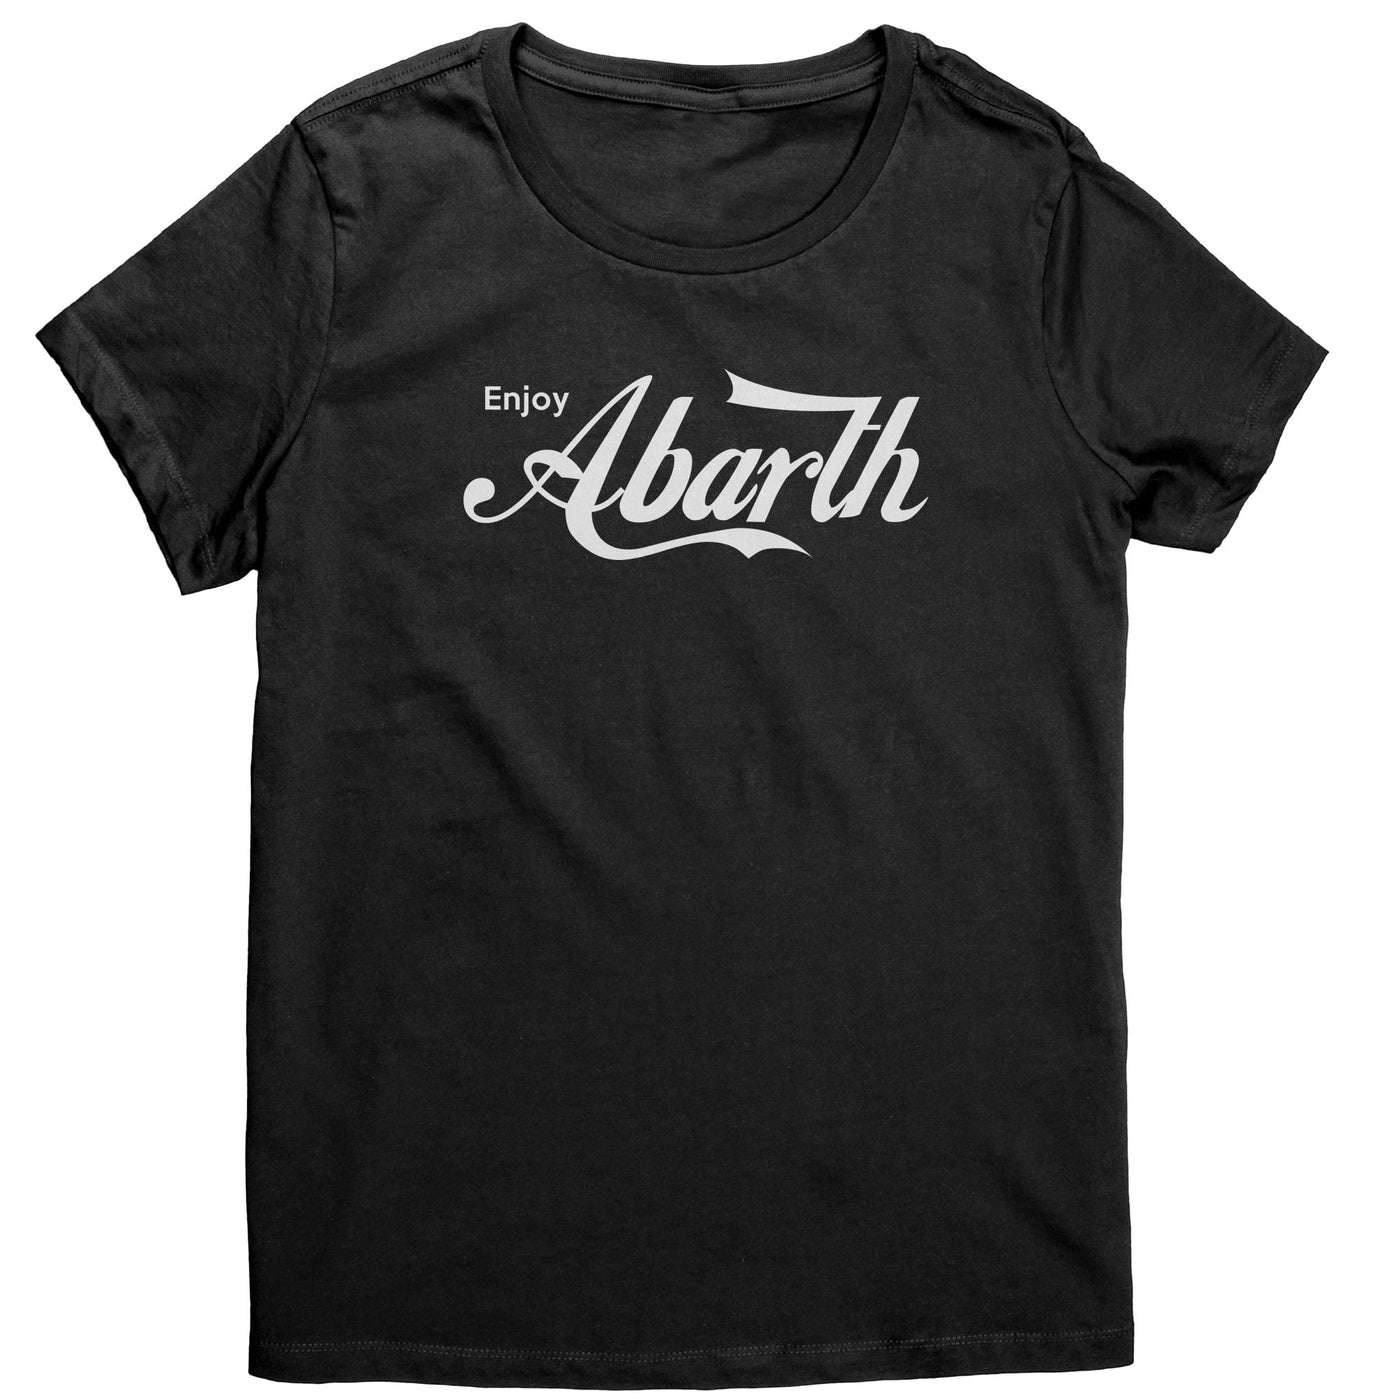 enjoy-abarth-womens-shirt-black